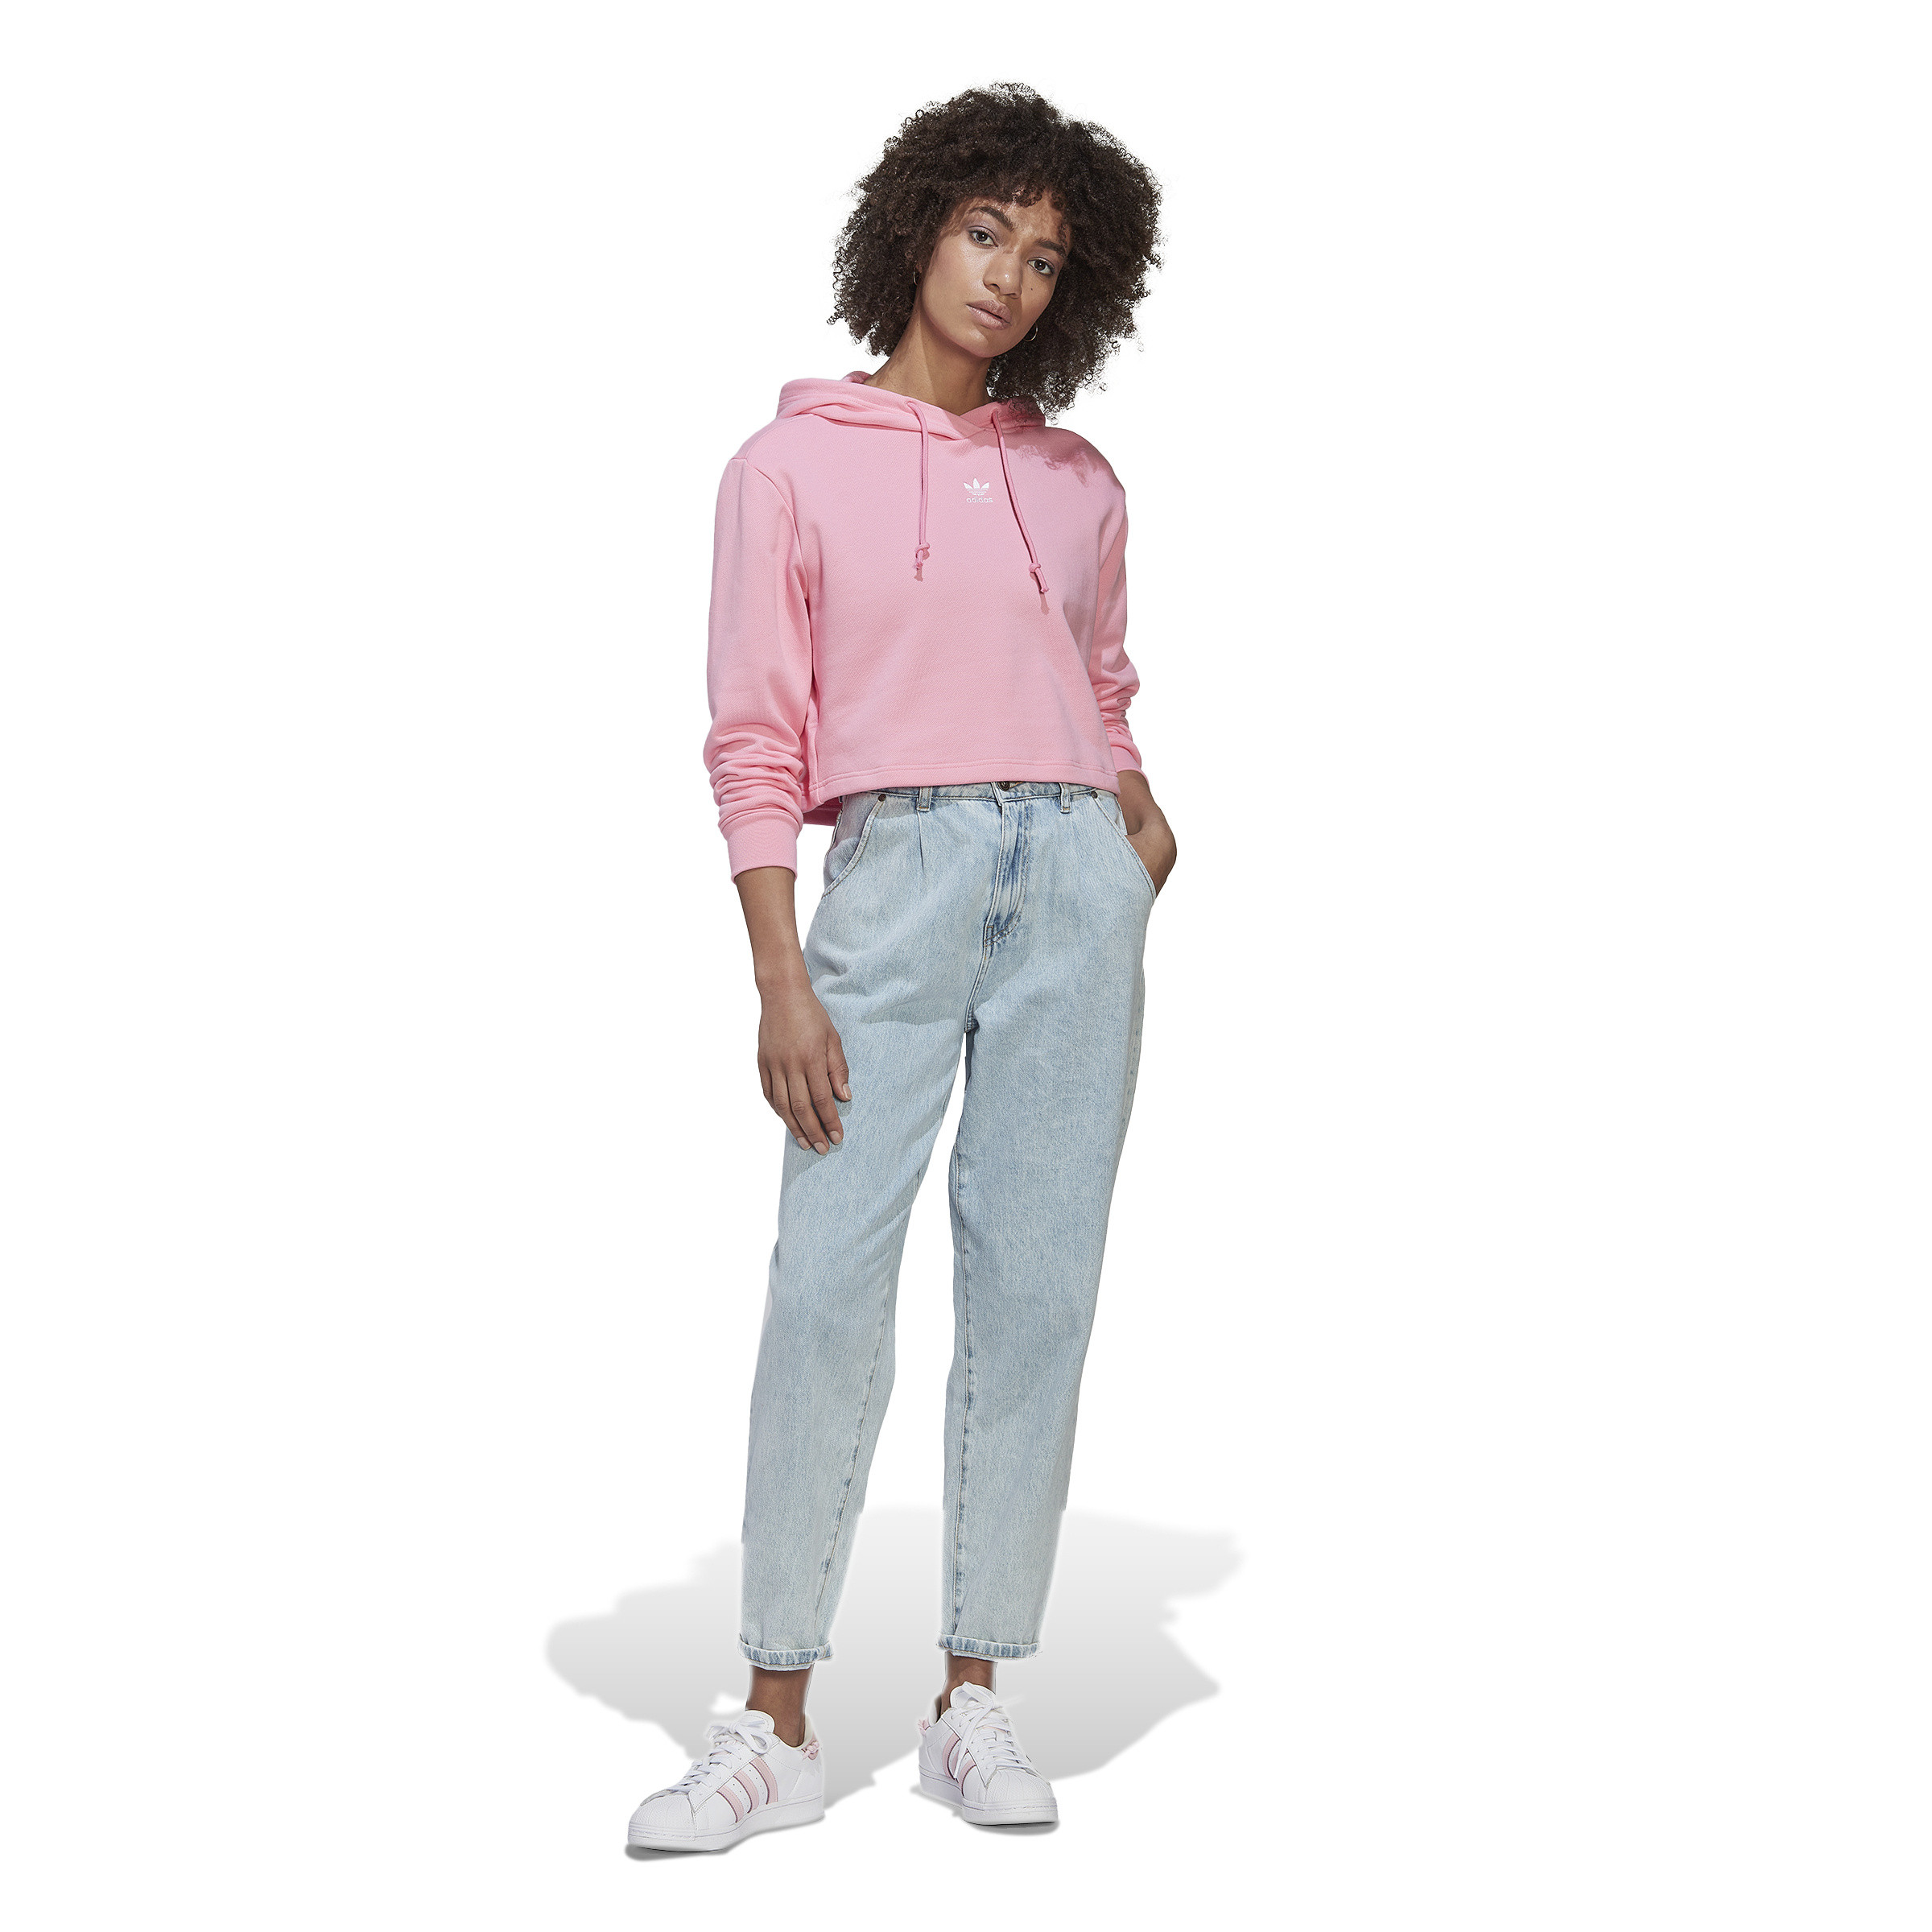 Adidas - Adicolor crop sweatshirt, Pink, large image number 6